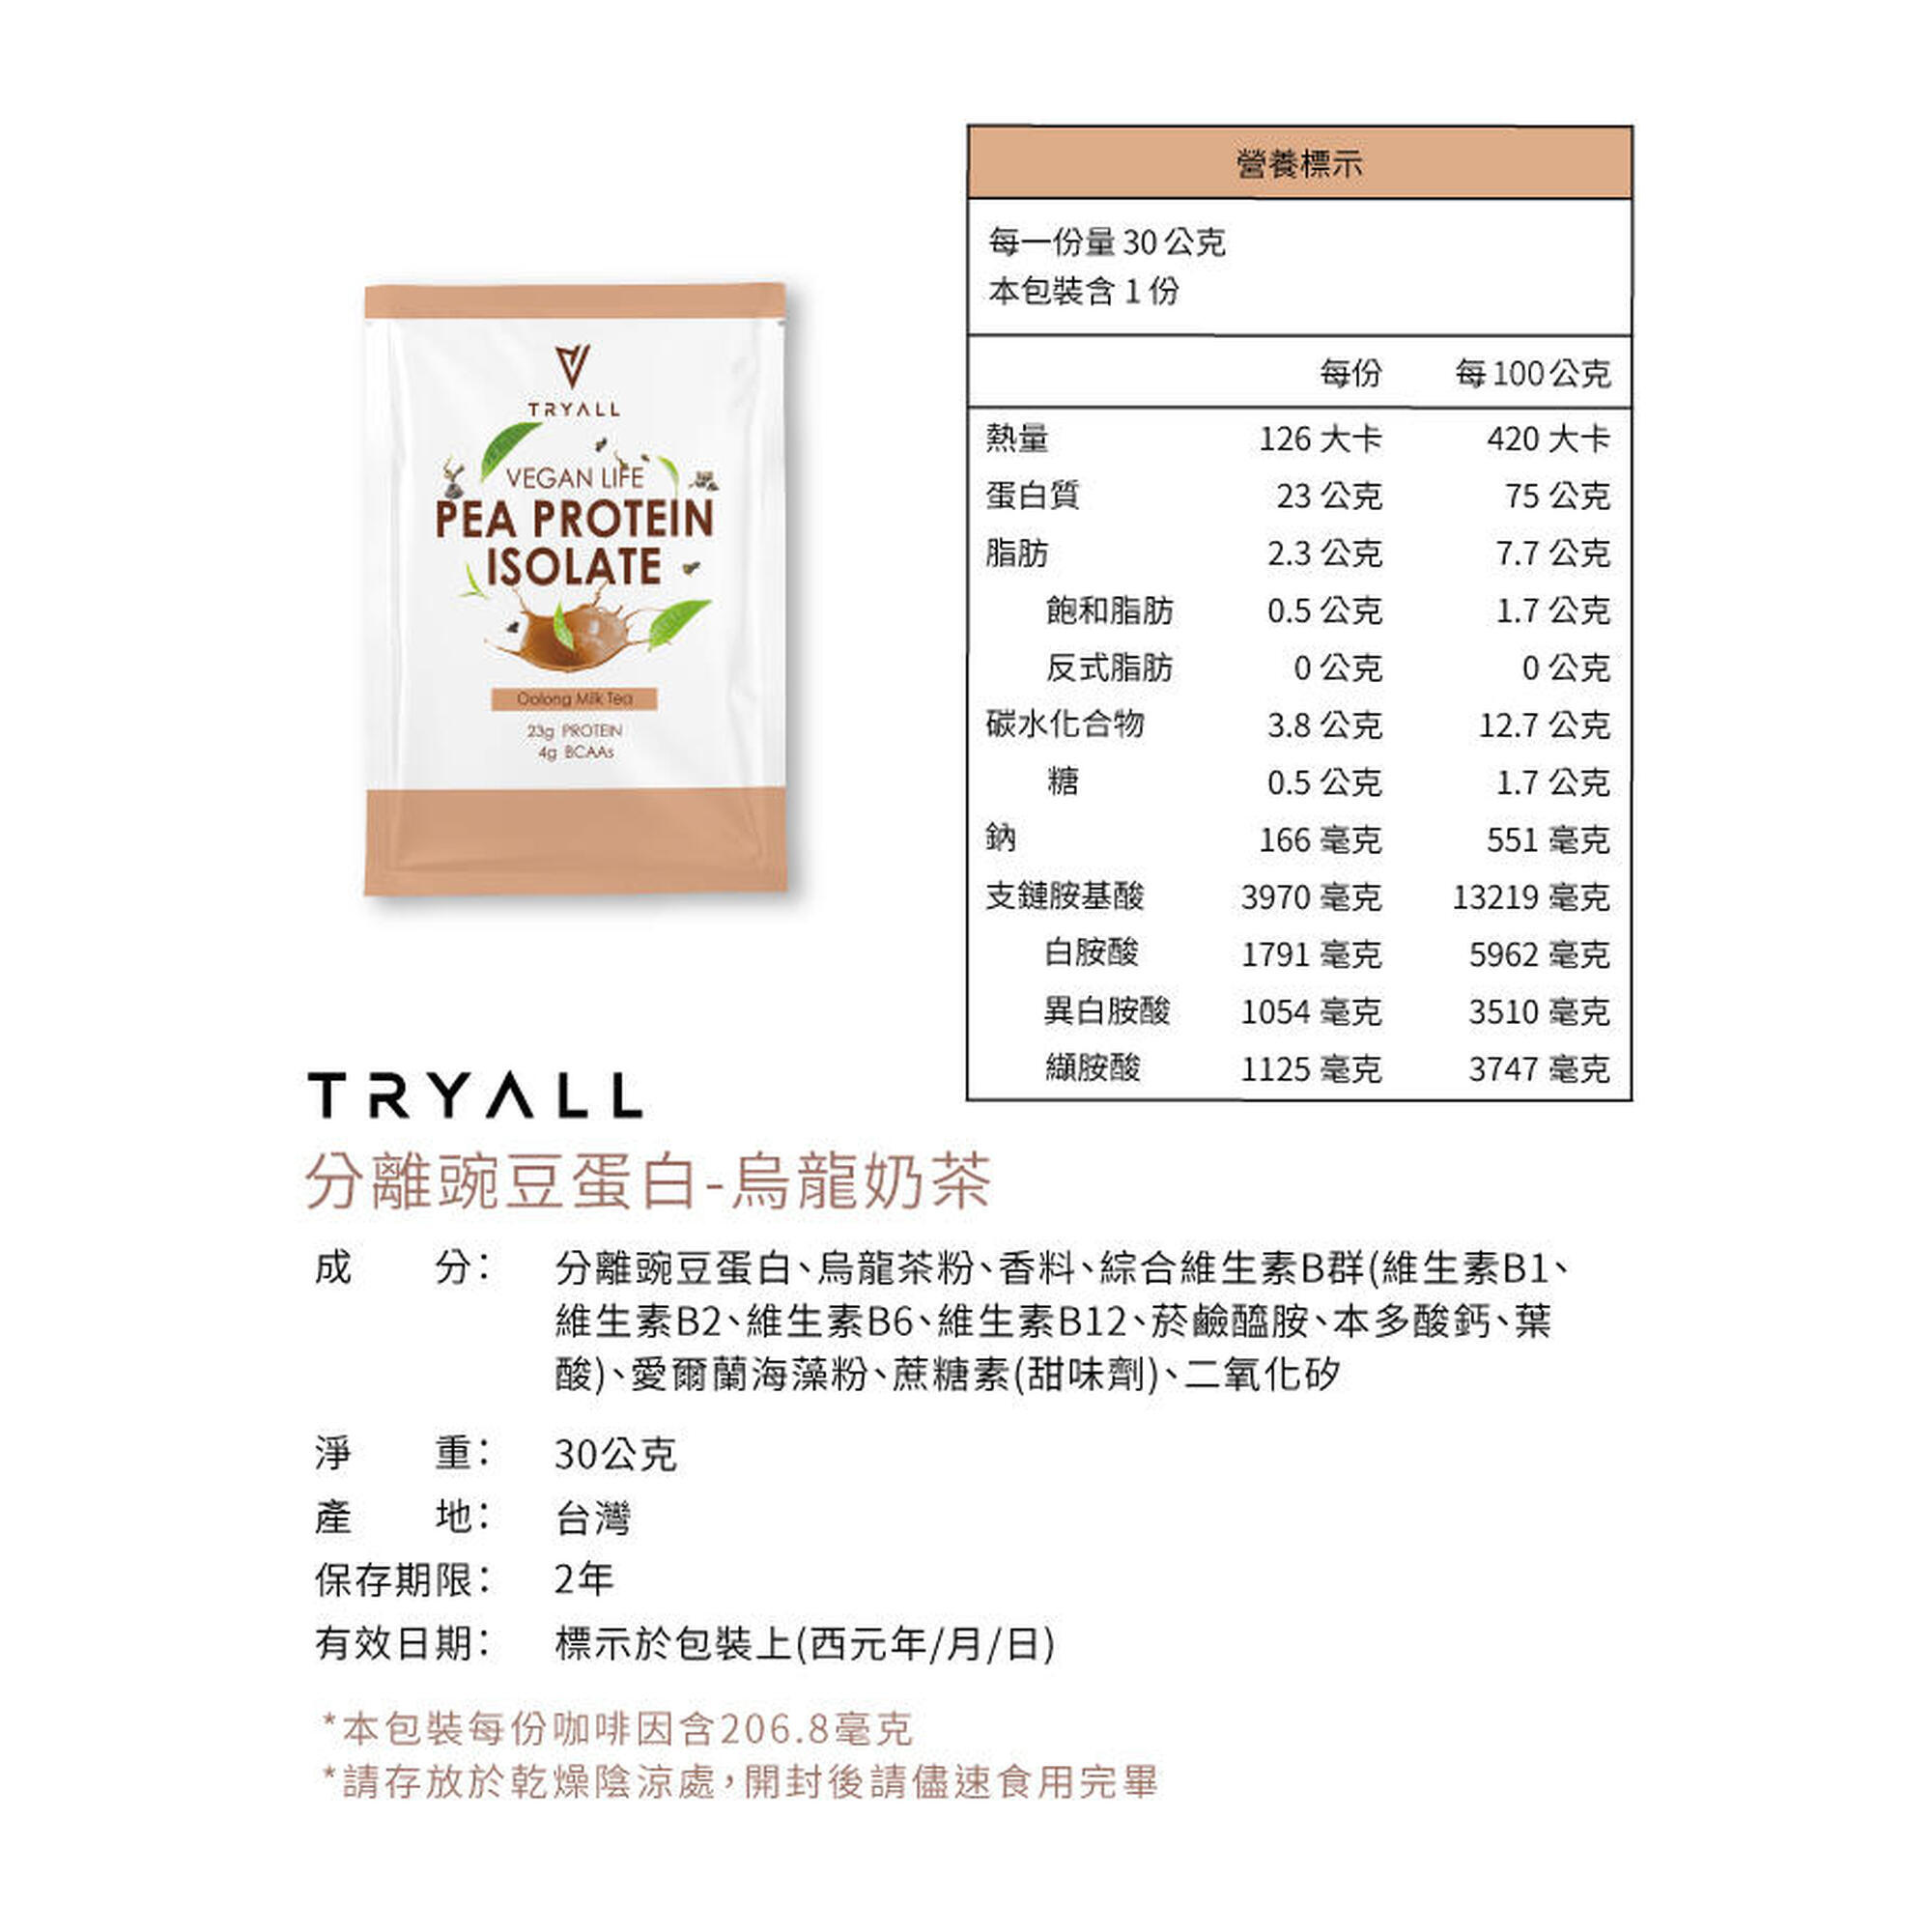 Pea Protein Isolate Sachet (15 packs) - Oolong Milk Tea